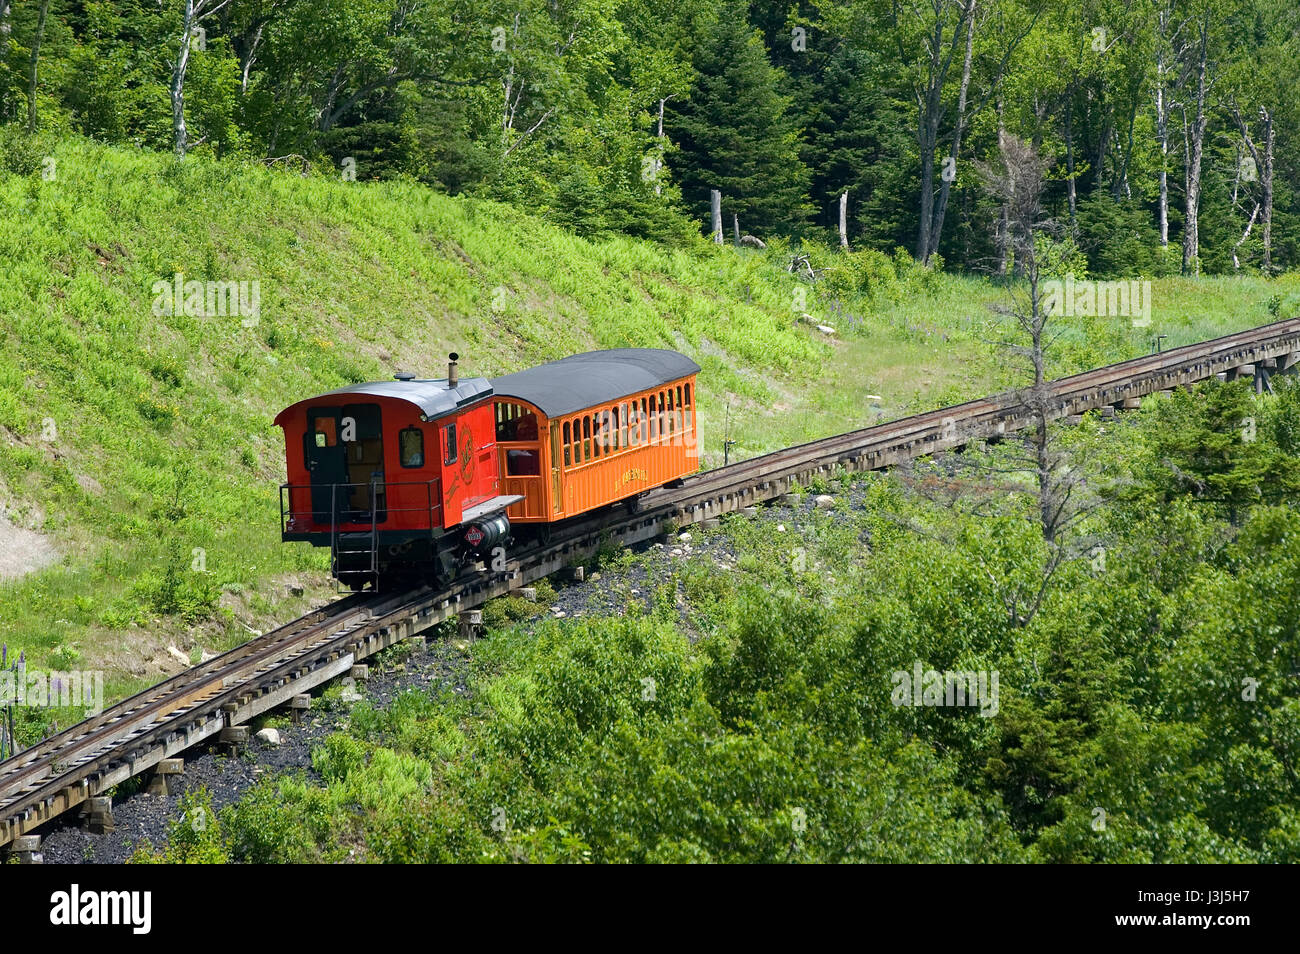 The Cog Railway which climbs Mt. Washington - Mount Washington, New Hampshire, USAR Stock Photo